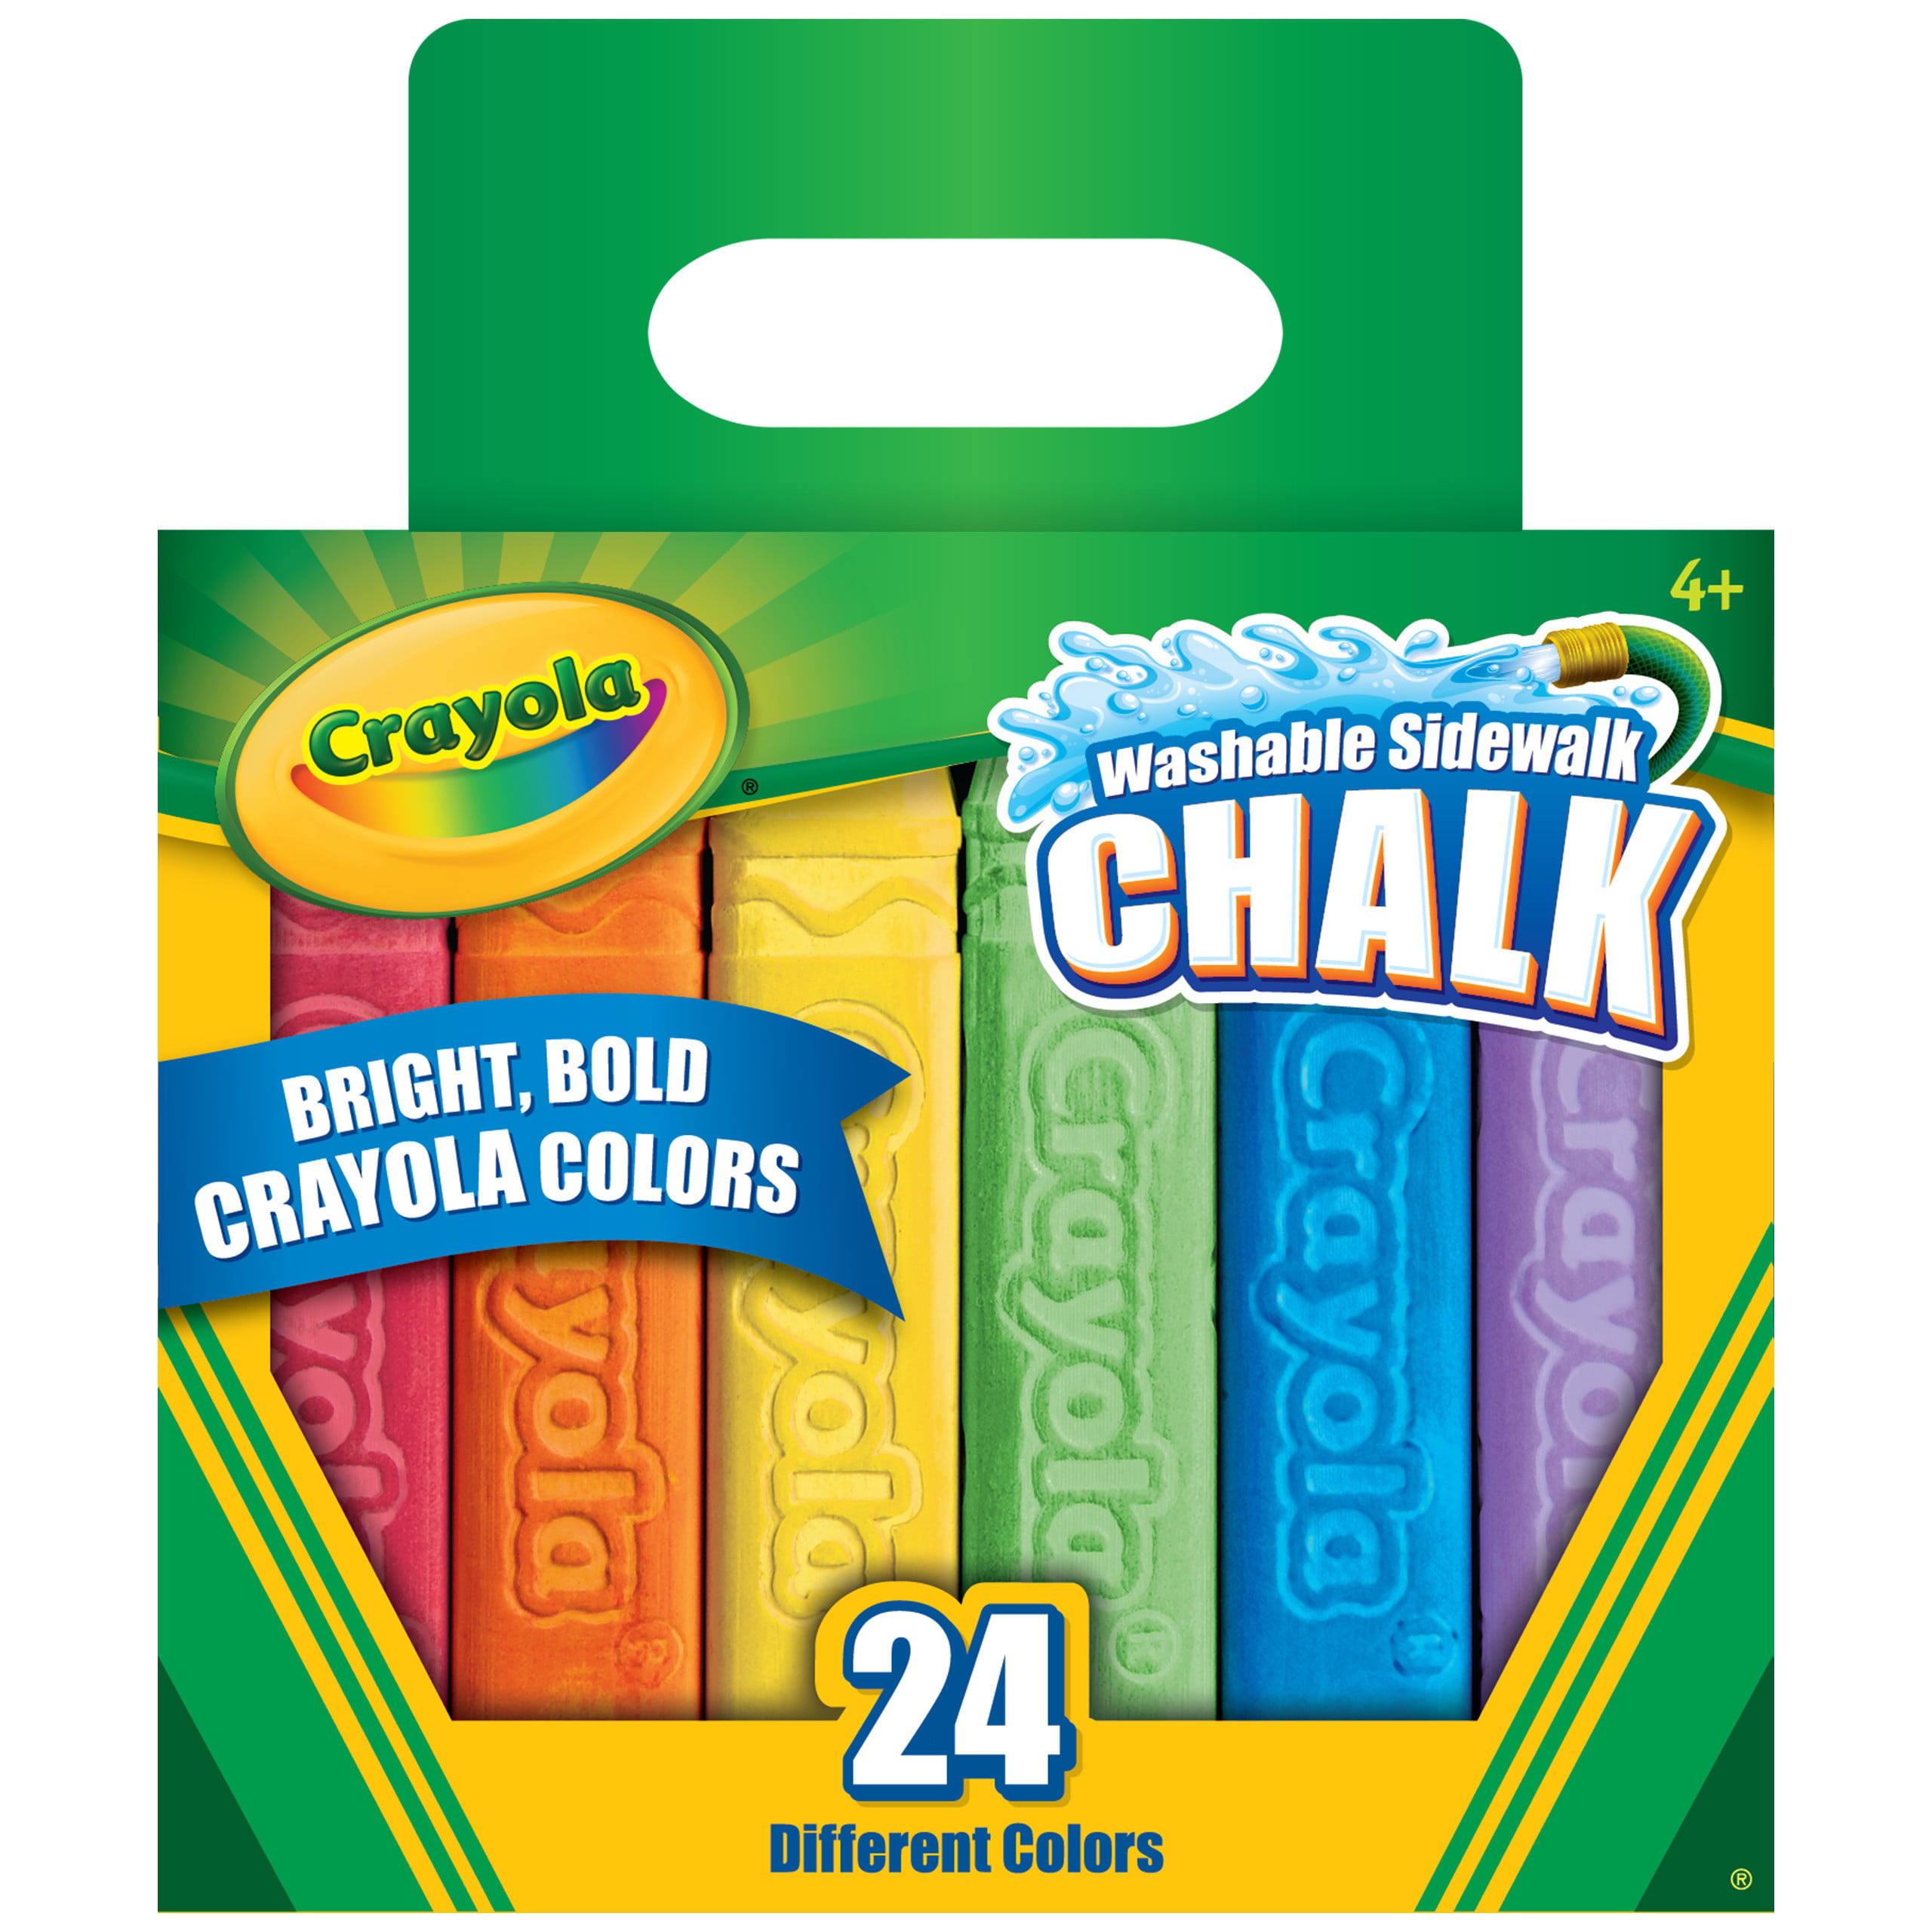 (YMMV) Crayola Washable Sidewalk Chalk in Assorted Colors 24 Ct $1.98 + Free Pickup